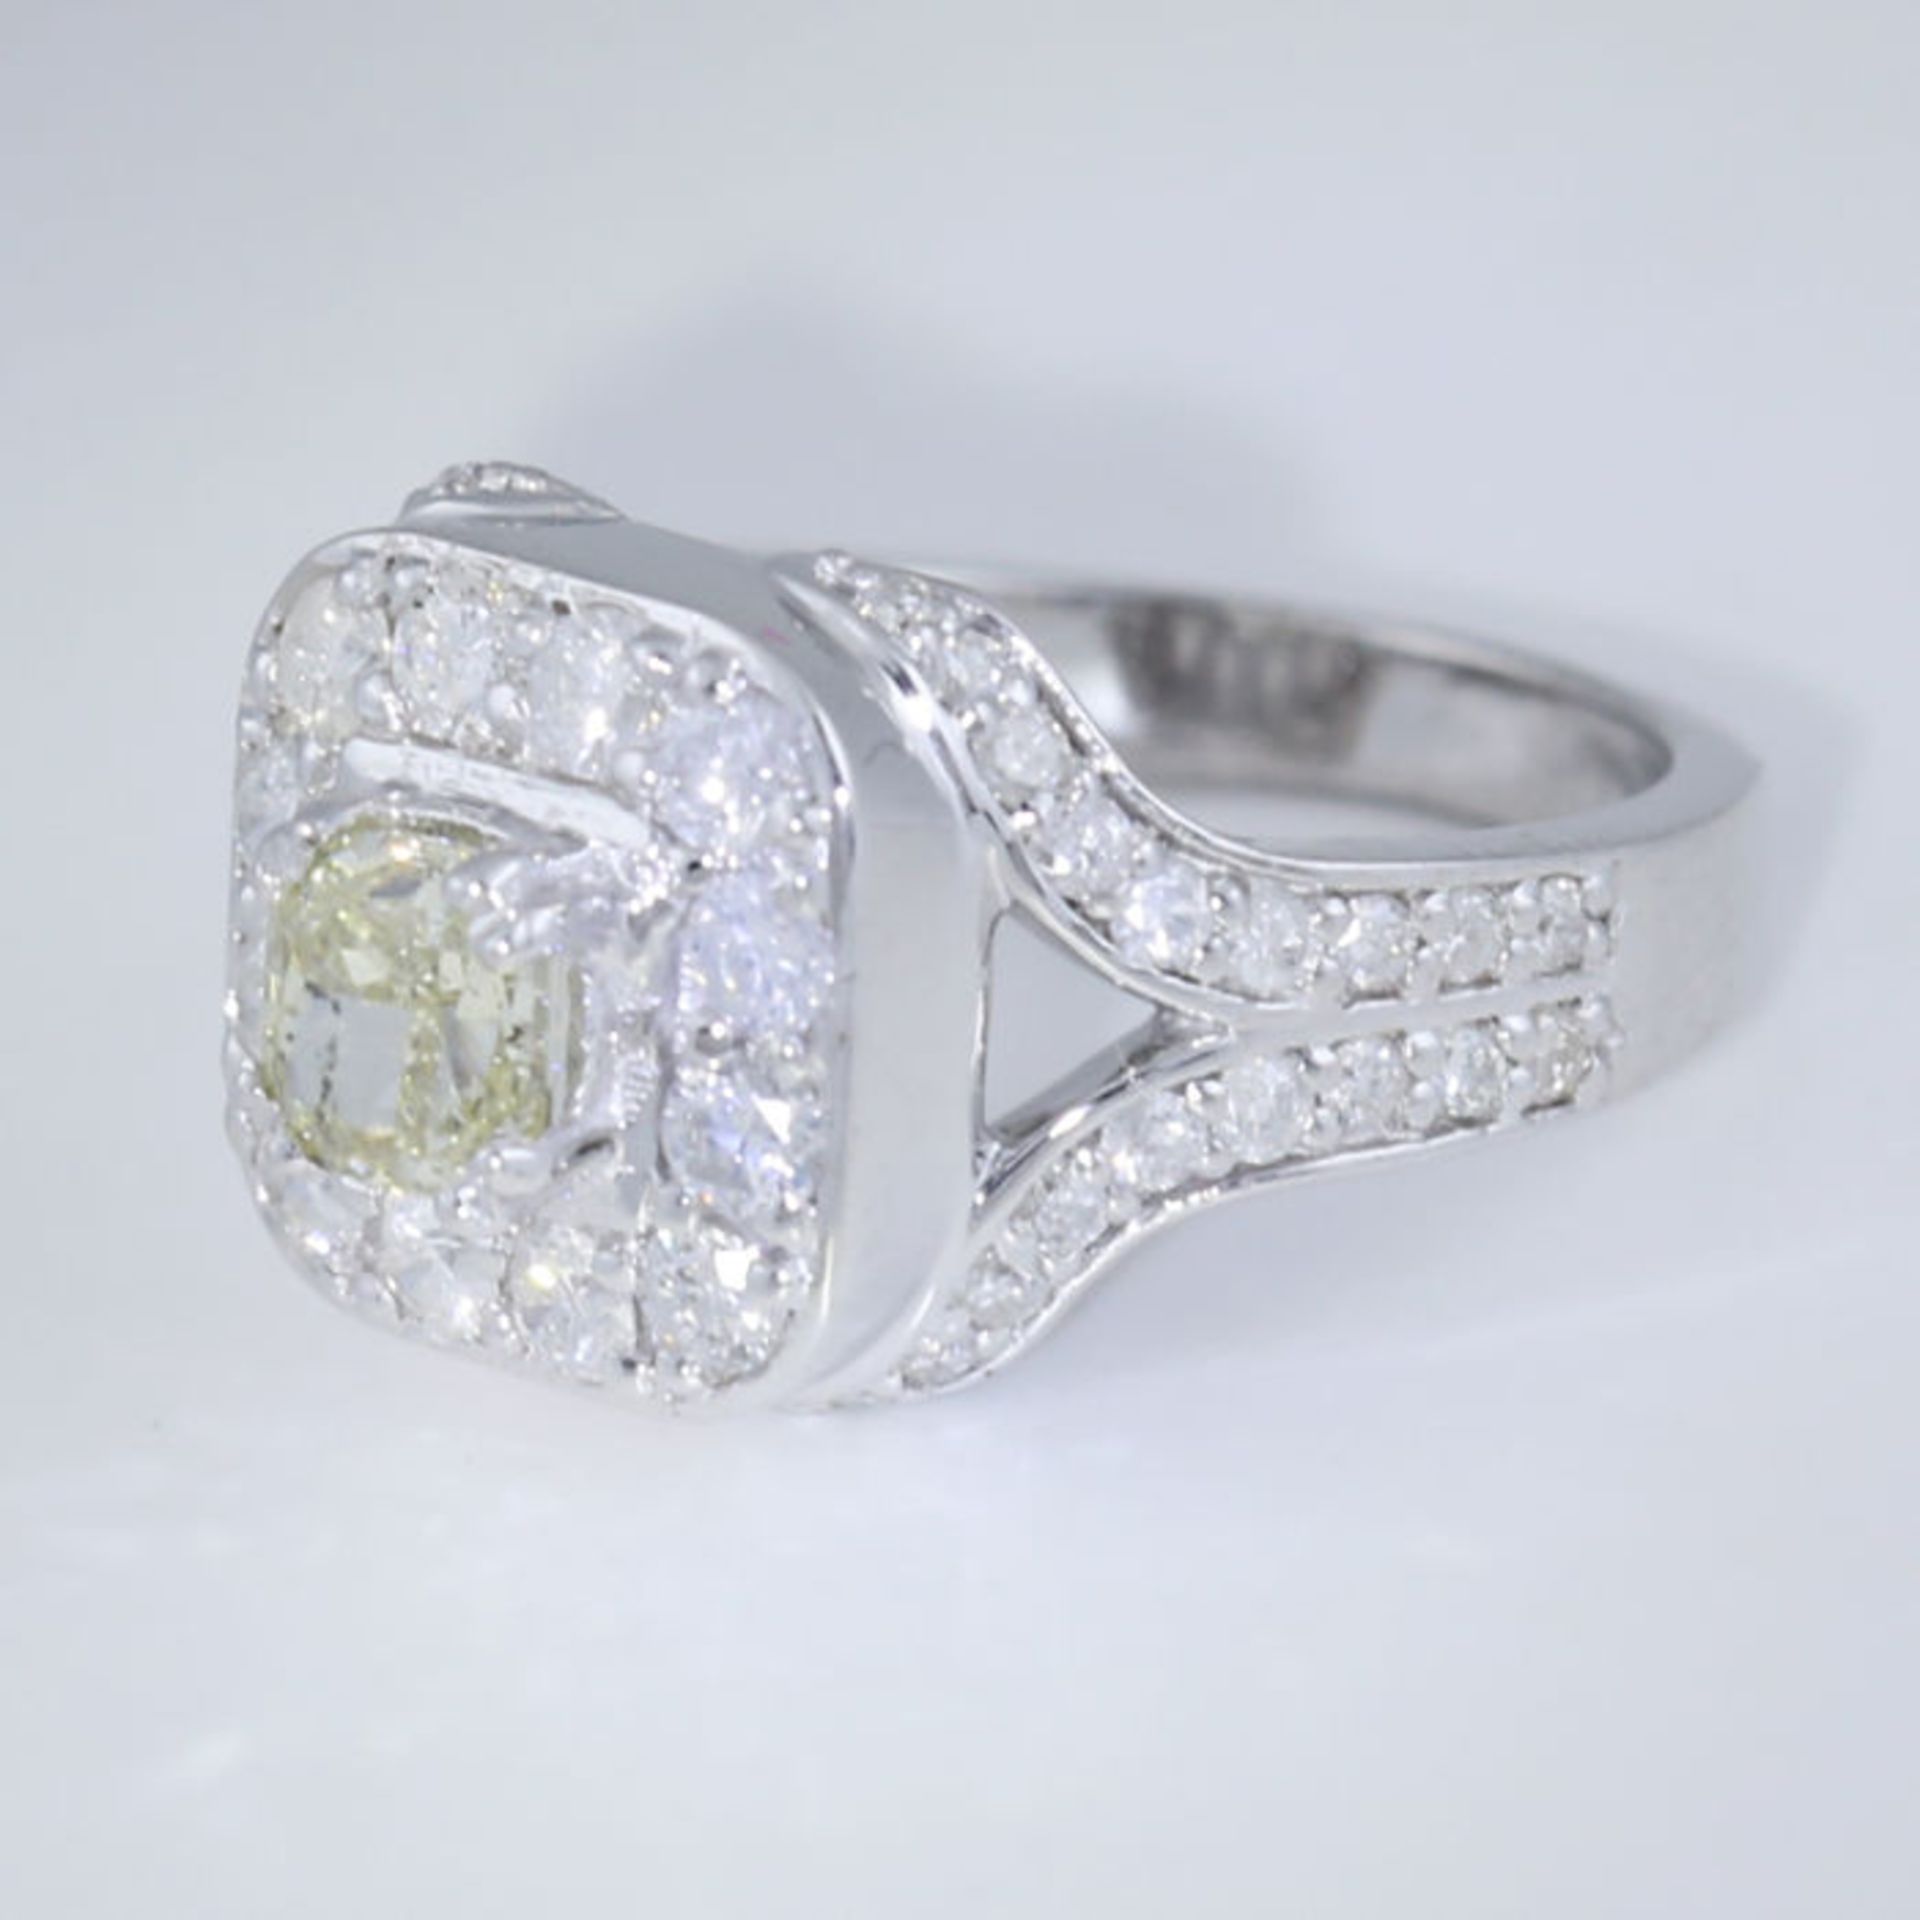 14 K / 585 White Gold Designer Solitaire Diamond (IGI Certified) Ring - Image 4 of 7